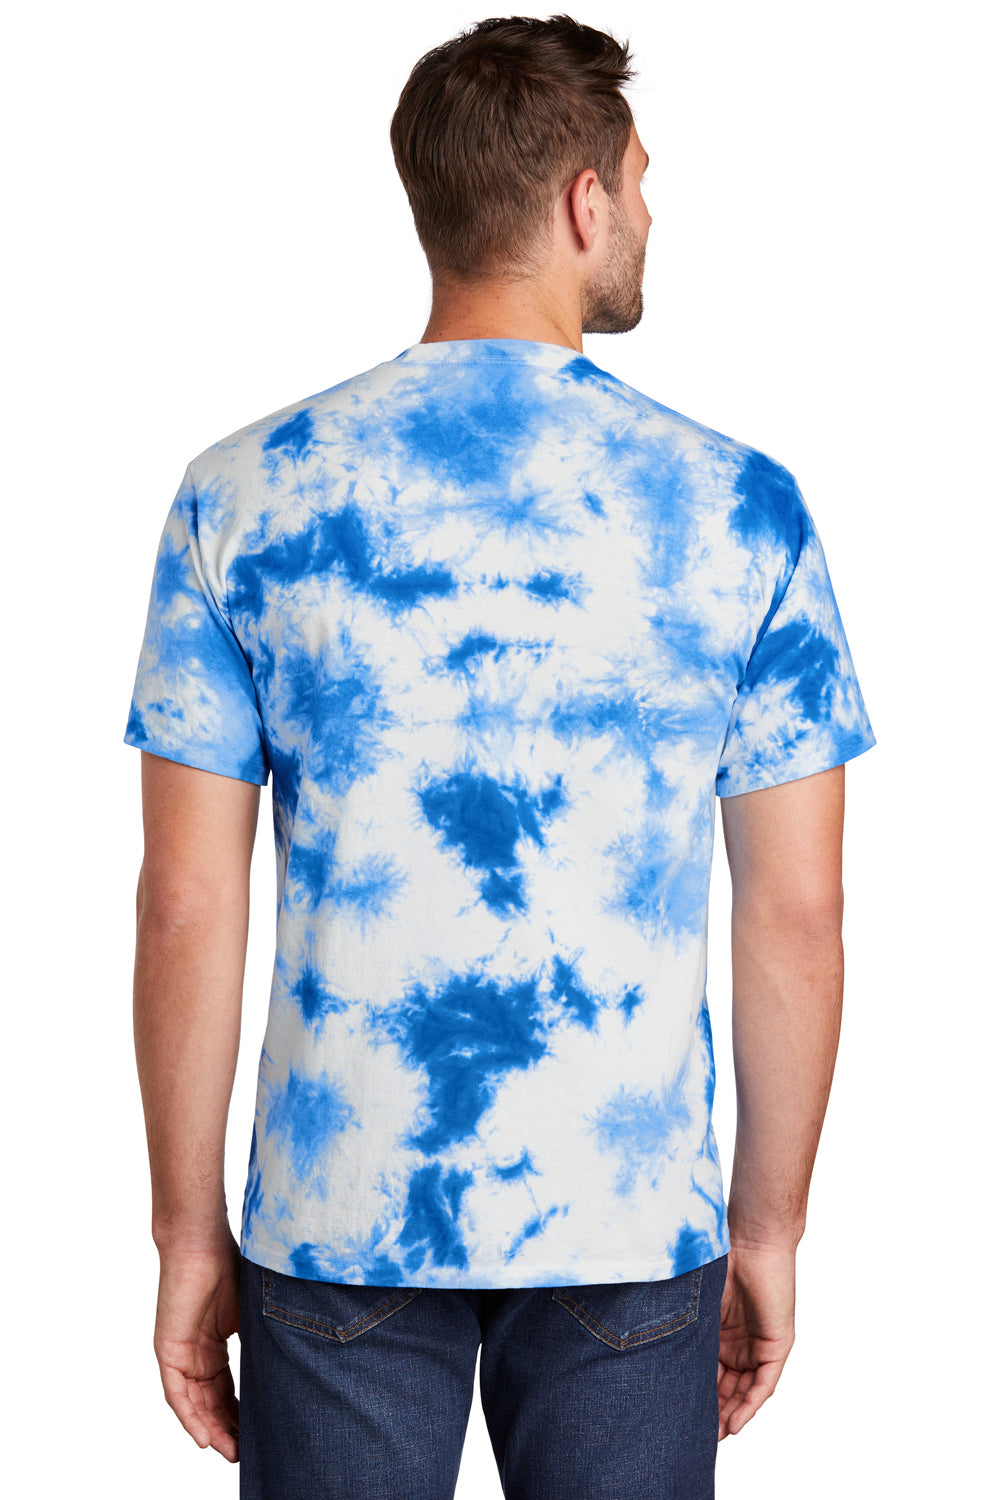 Port & Company Mens Crystal Tie-Dye Short Sleeve Crewneck T-Shirt True Royal Blue Side